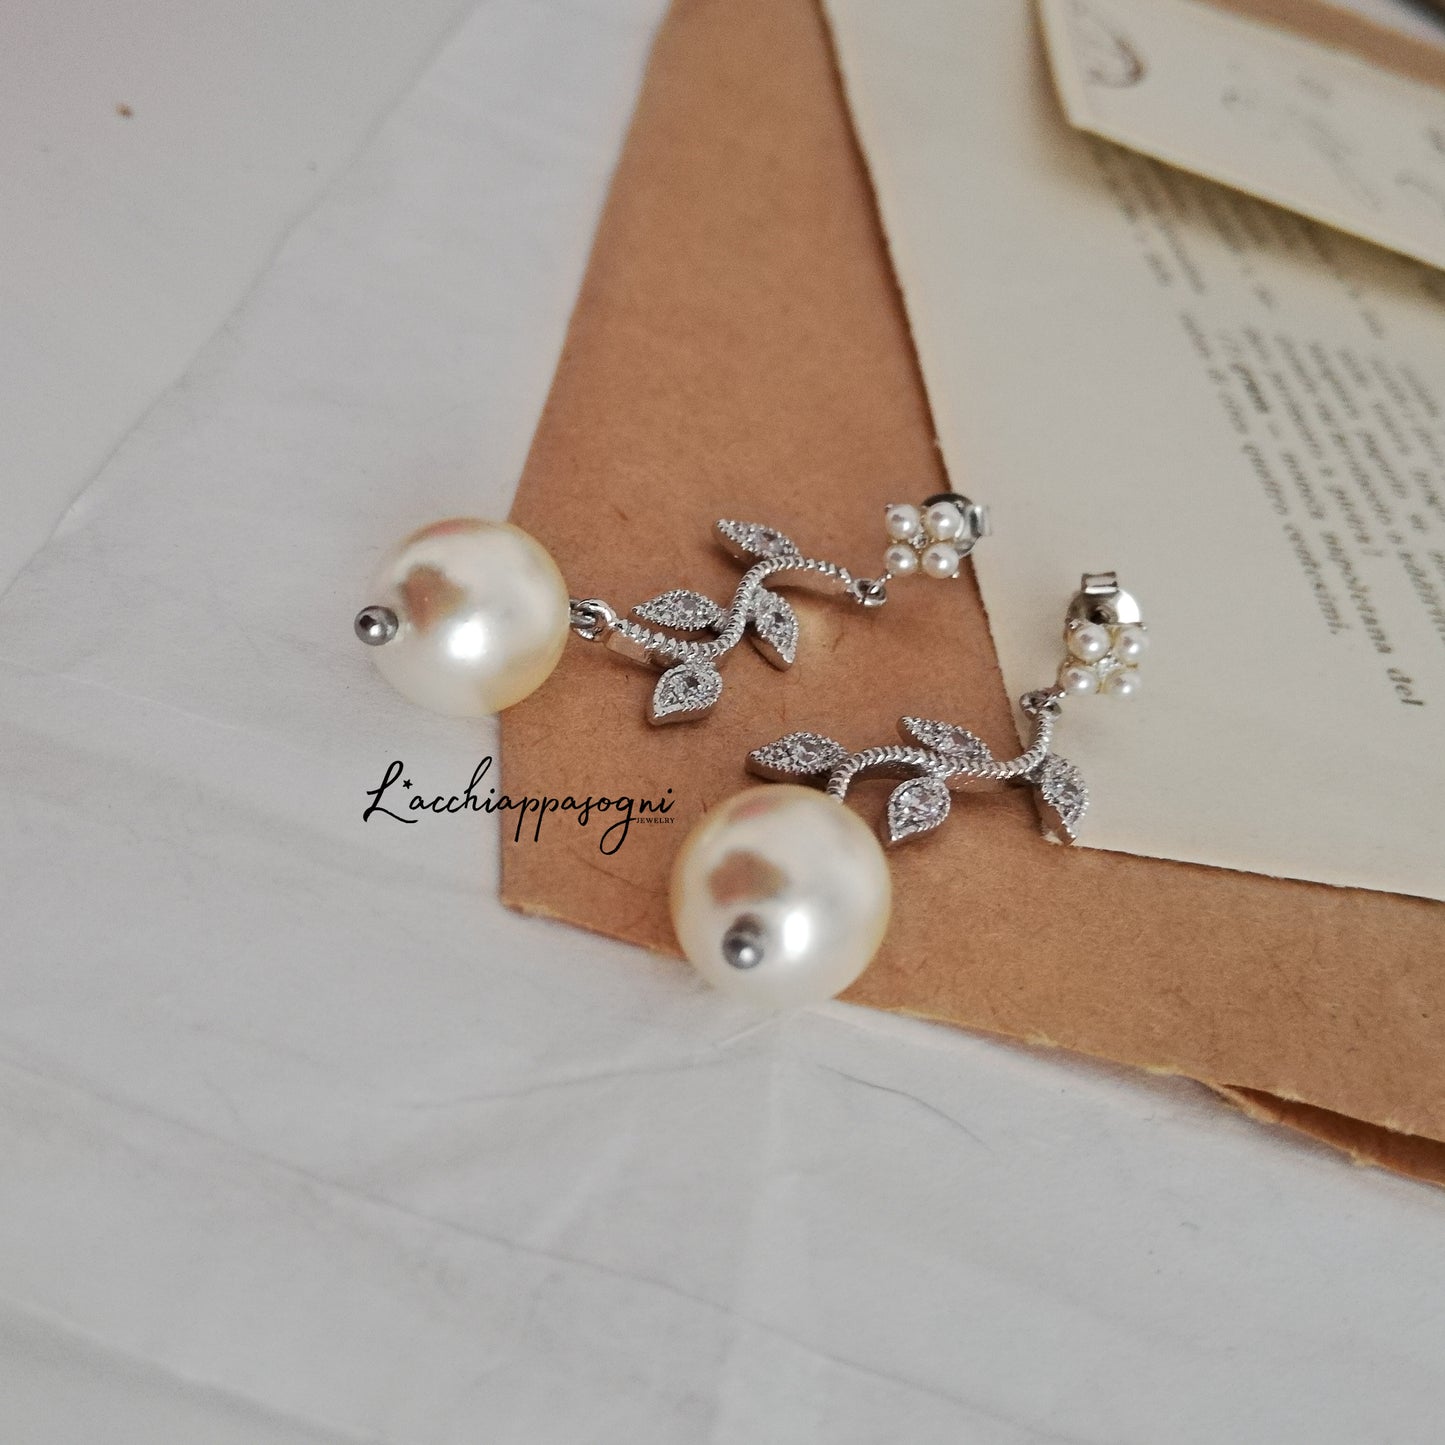 Anna Karenina inspired Leaves and Pearls Earrings